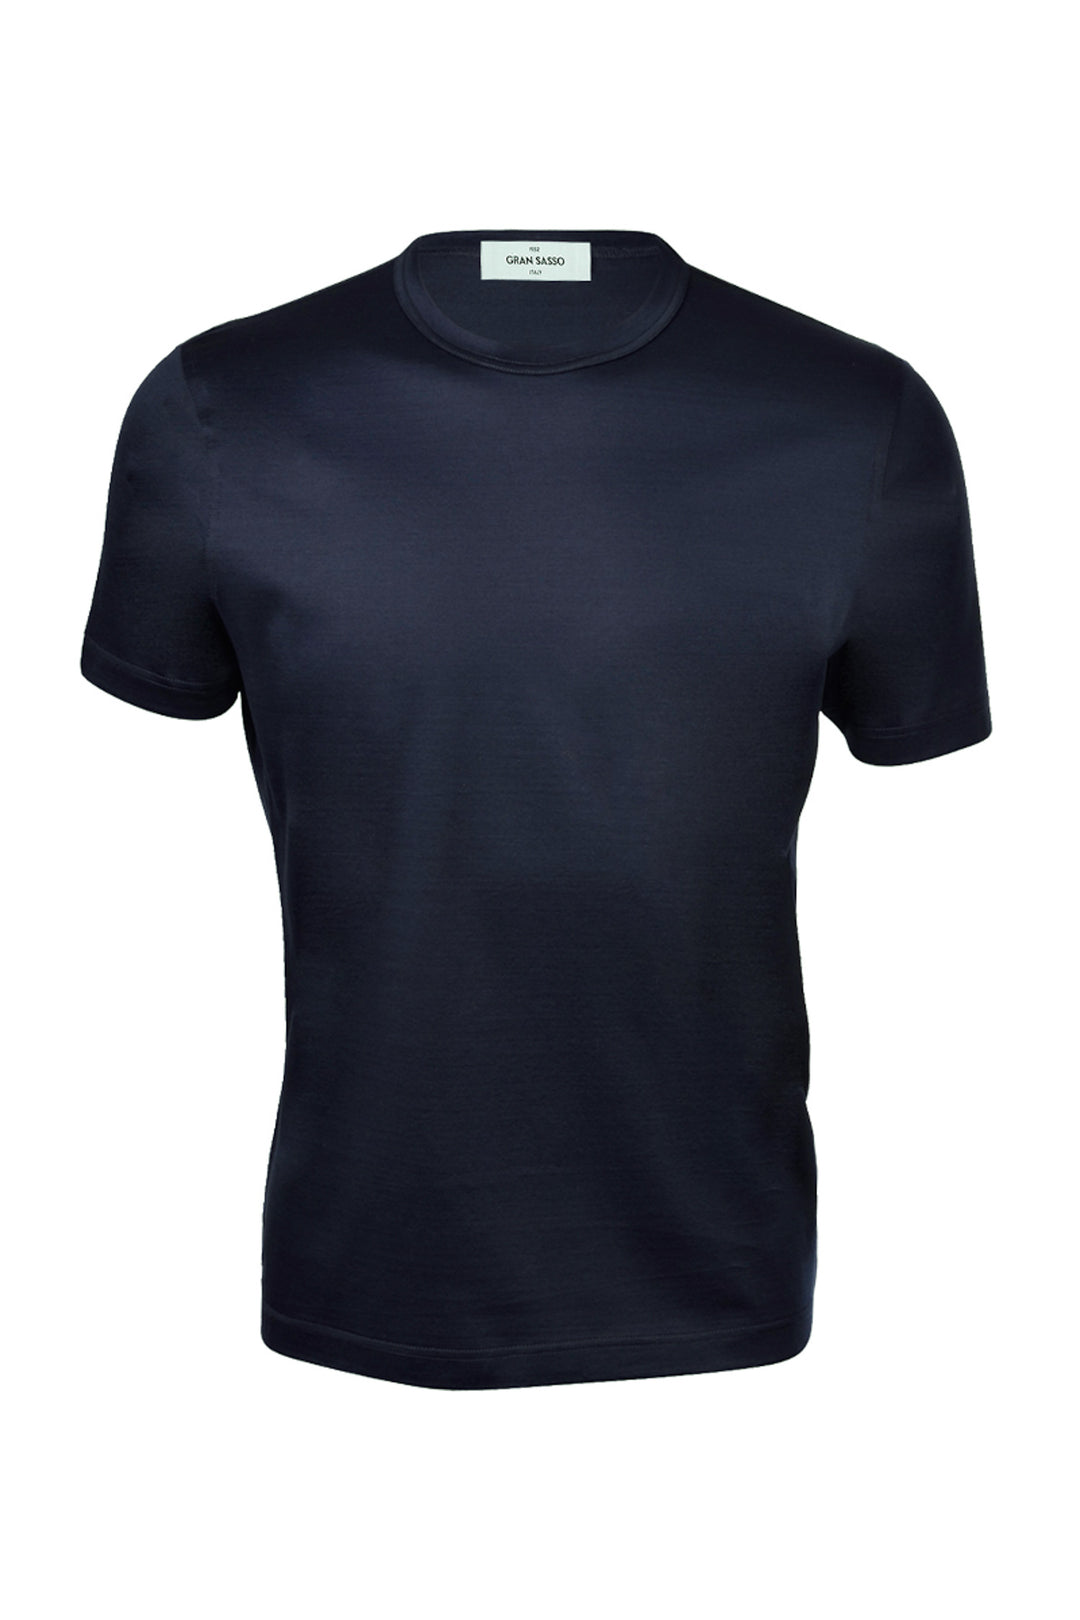 GRAN SASSO T-shirt blu navy in filo di Scozia - Mancinelli 1954